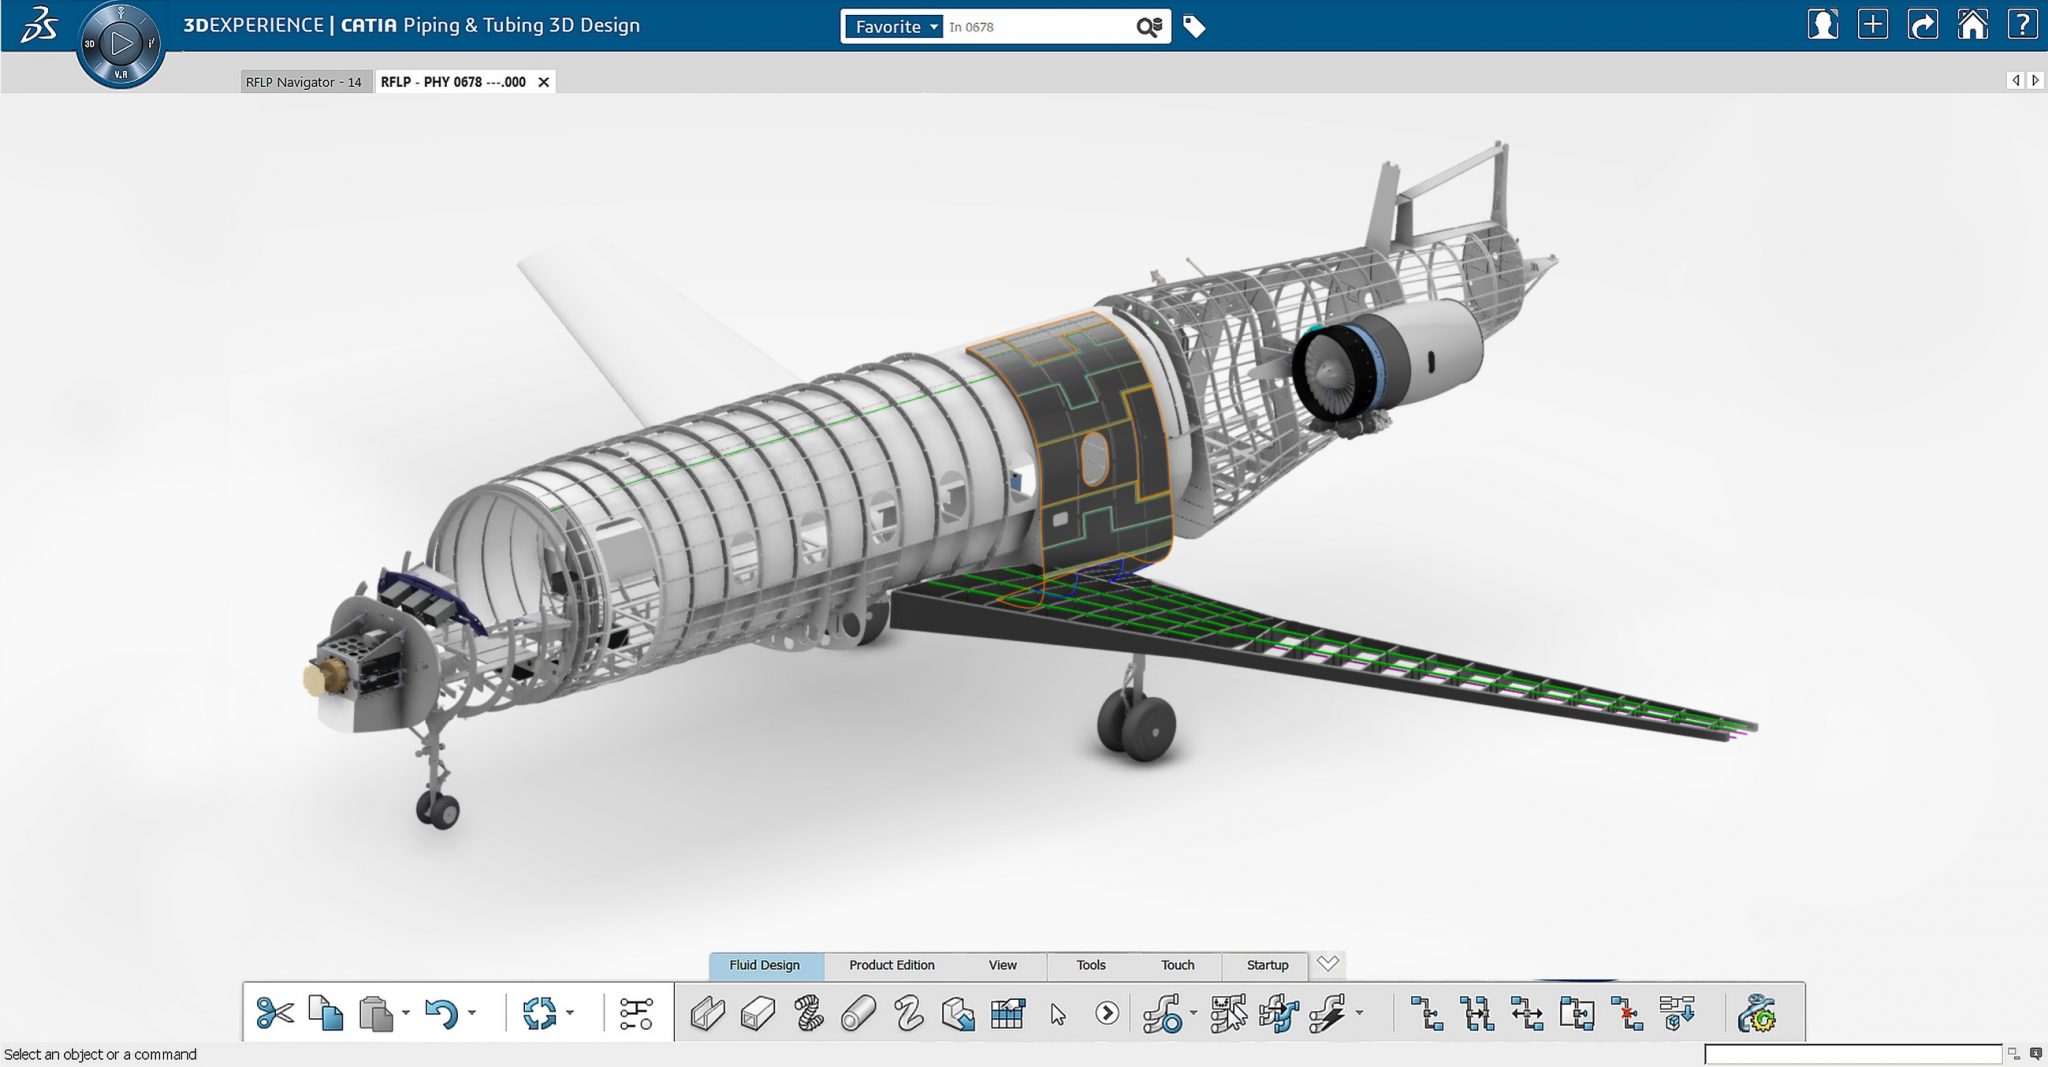 3DEXPERIENCE's aerospace application. Image via Dassault Systèmes.